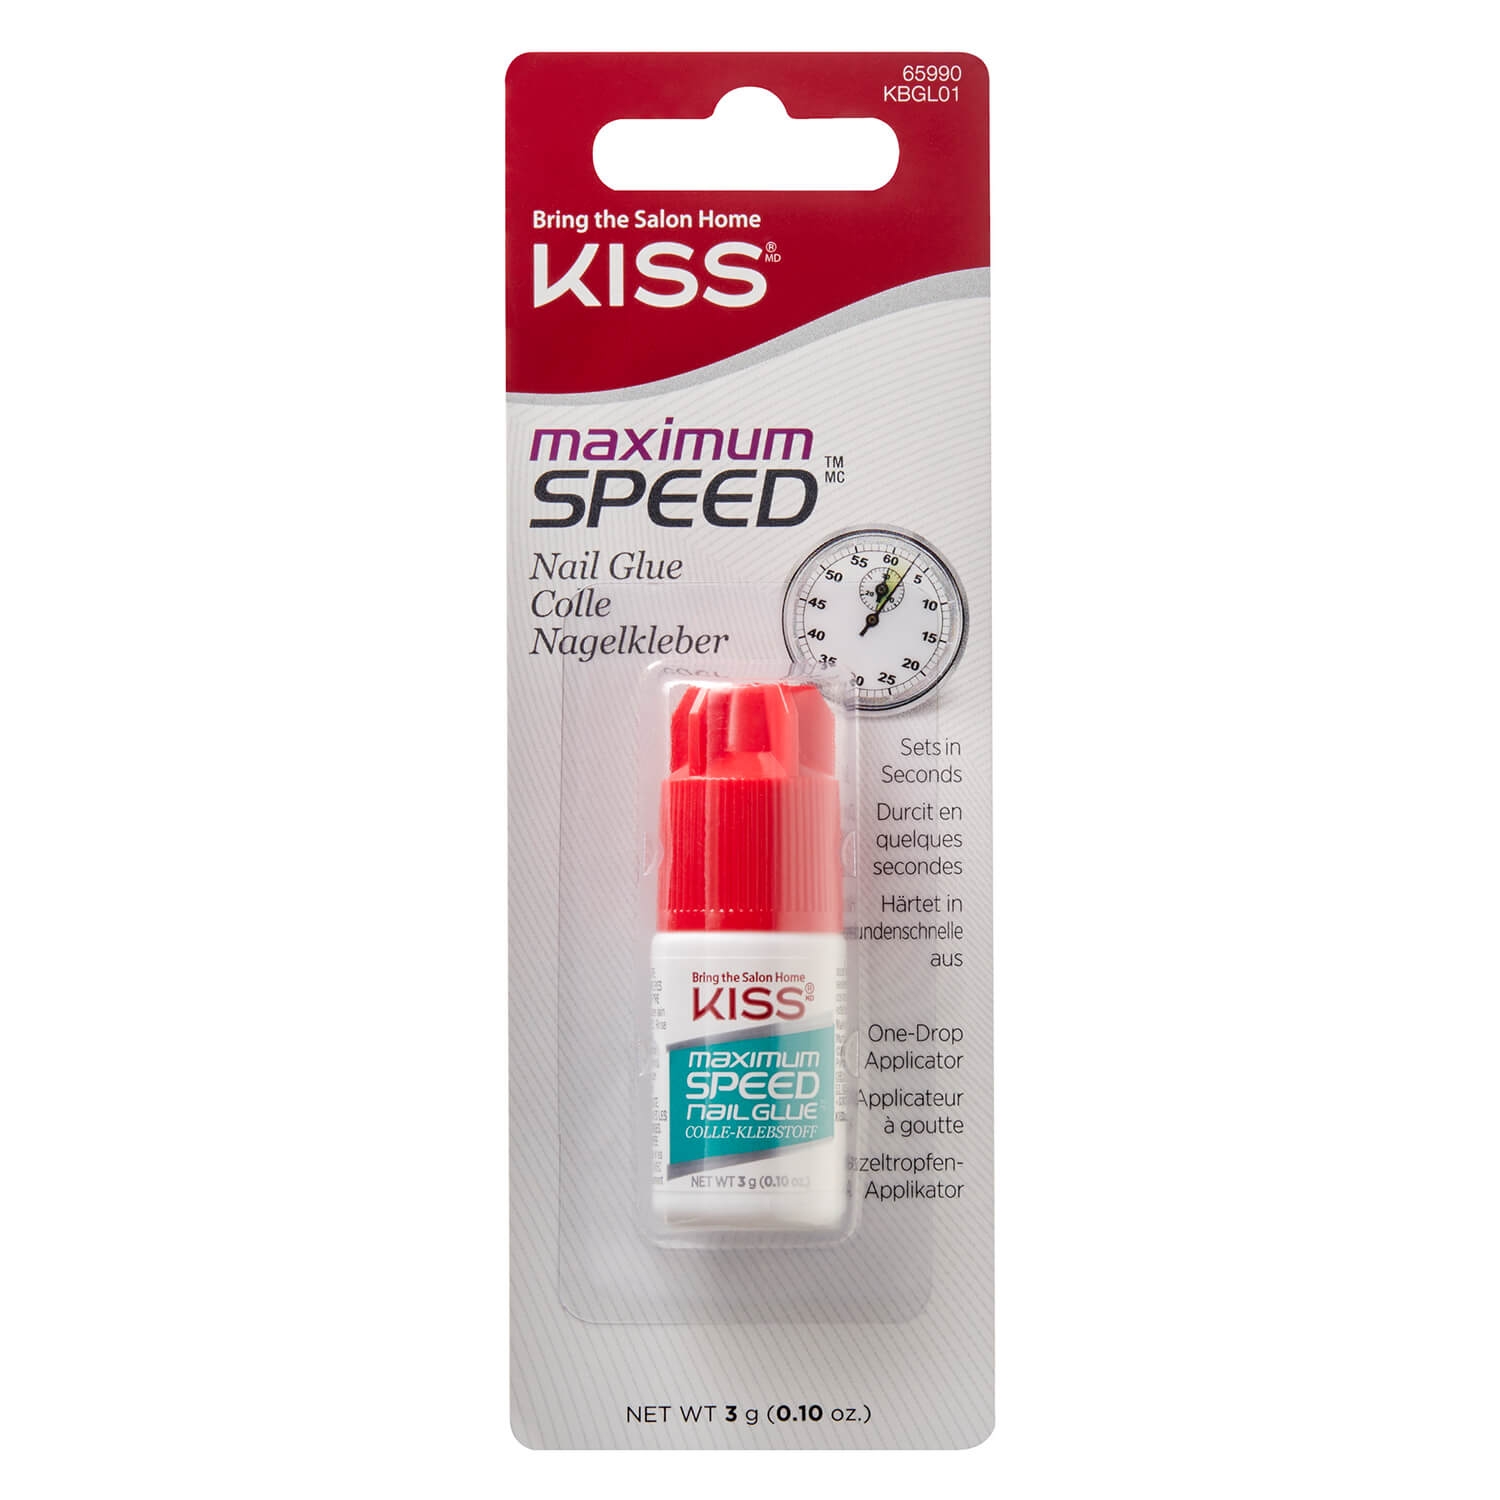 Produktbild von KISS Nails - Maximum Speed Nail Glue